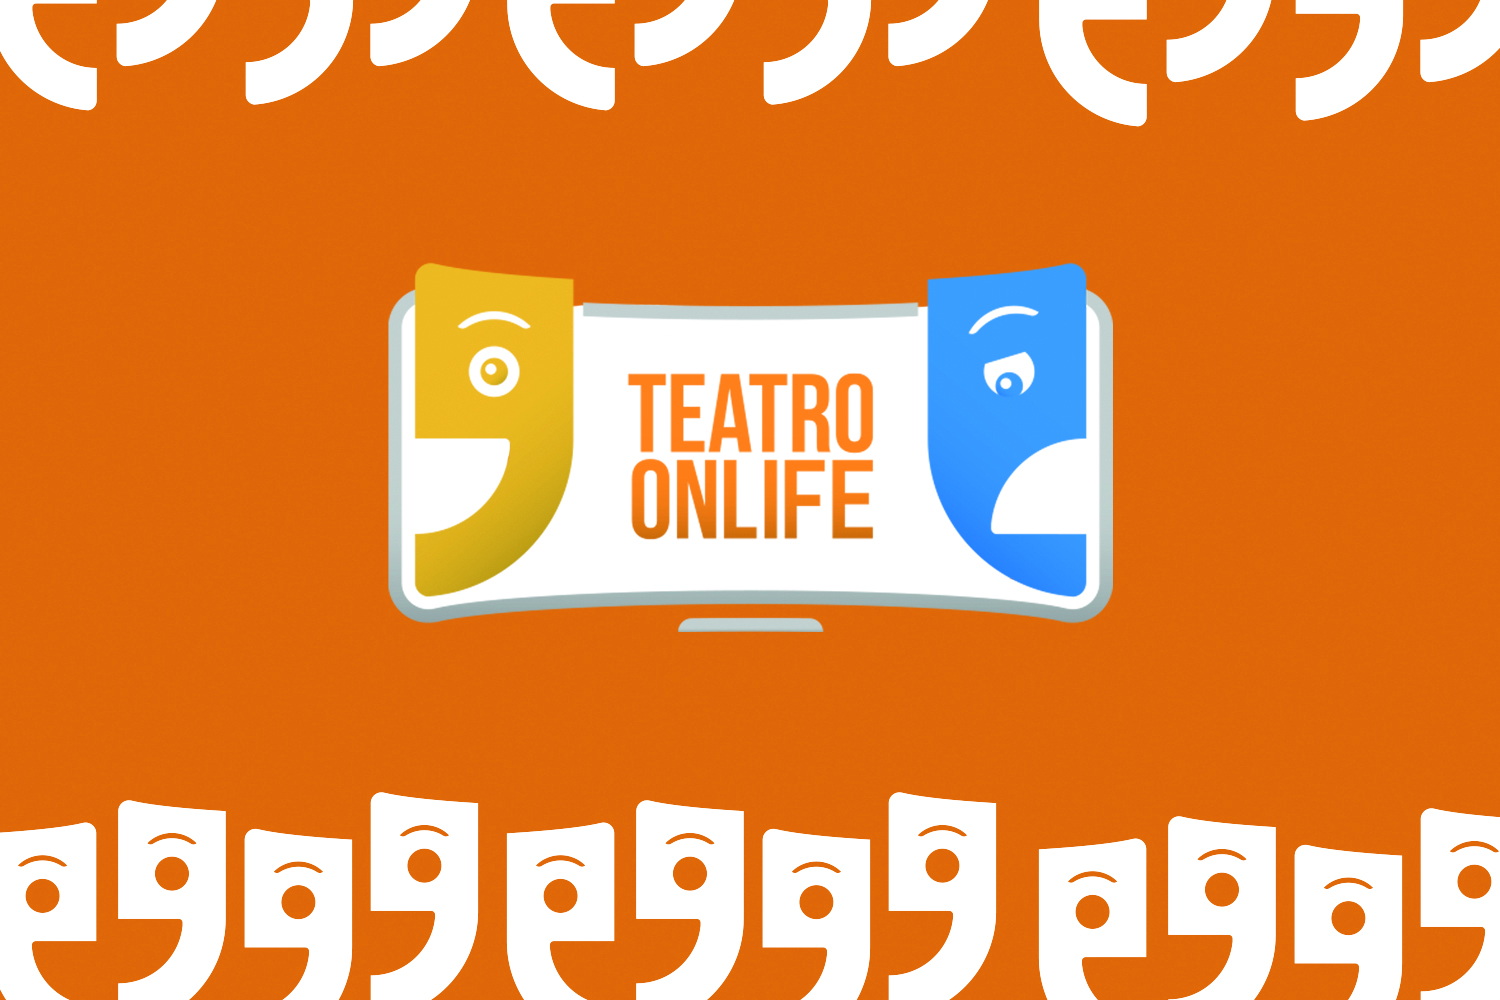 Teatro_Onlife